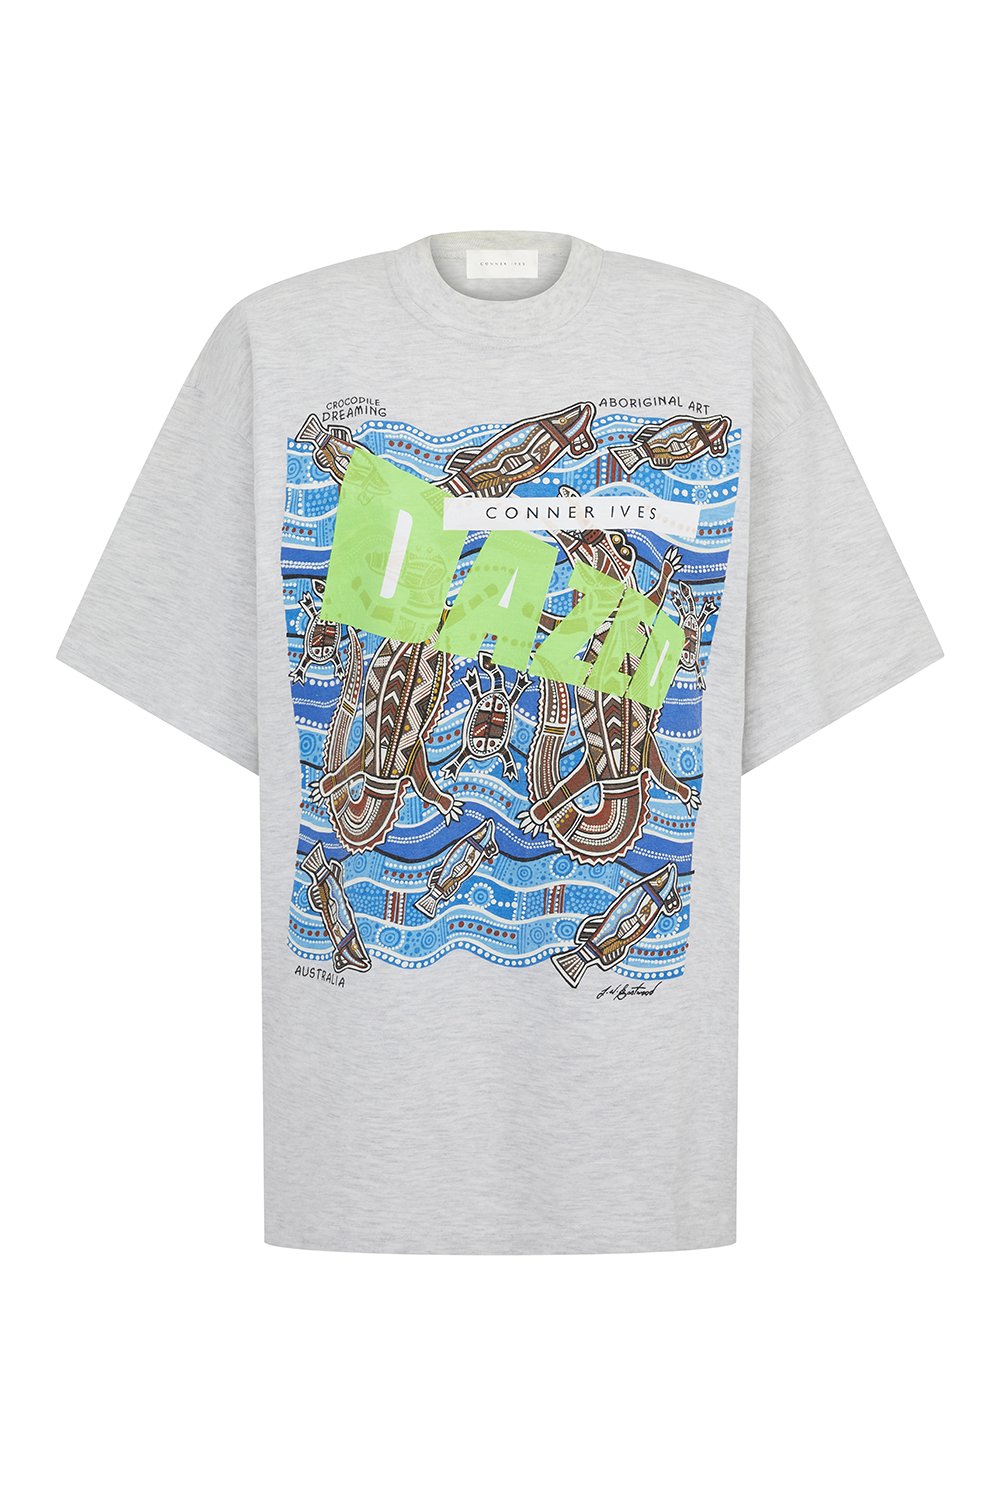 Conner Ives x Dazed Reprint T-shirt - Small